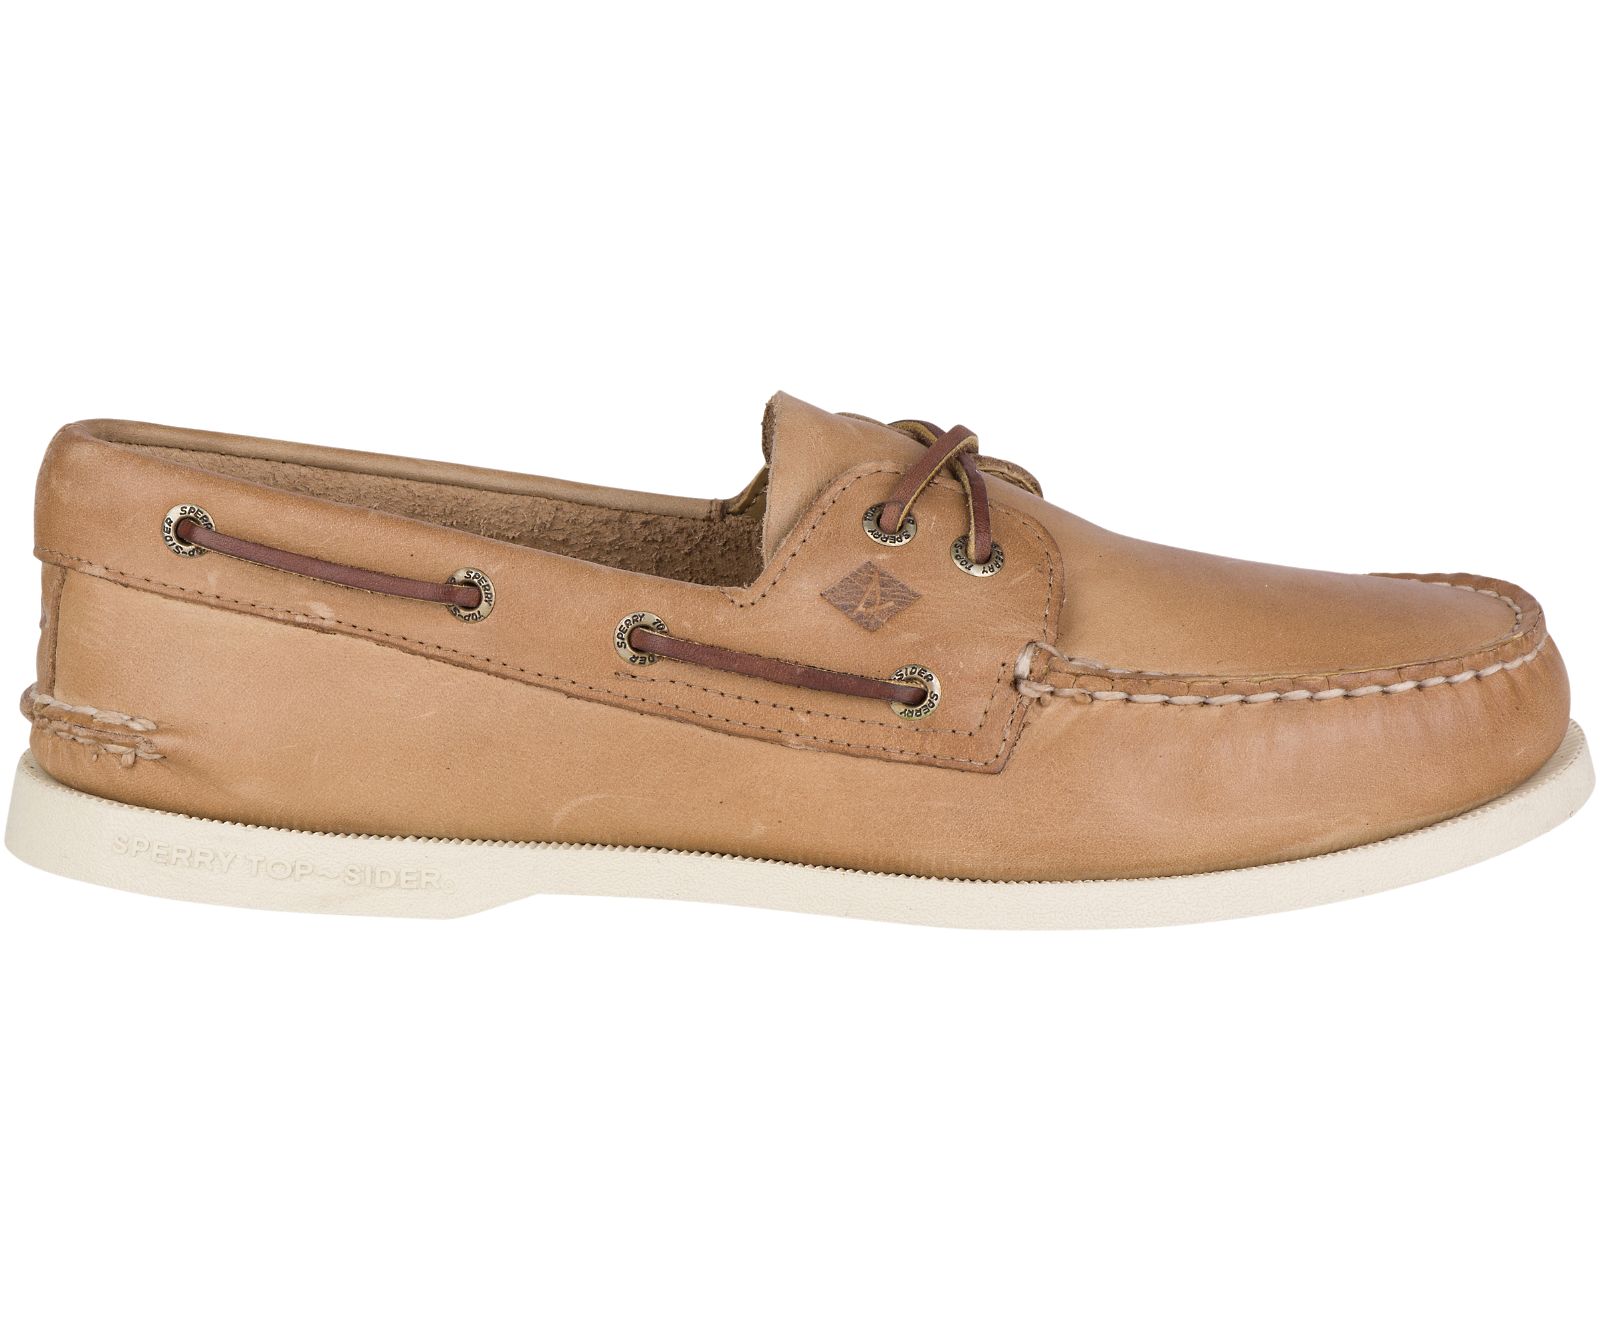 Men's Authentic Original Leather Boat Shoe - Oatmeal